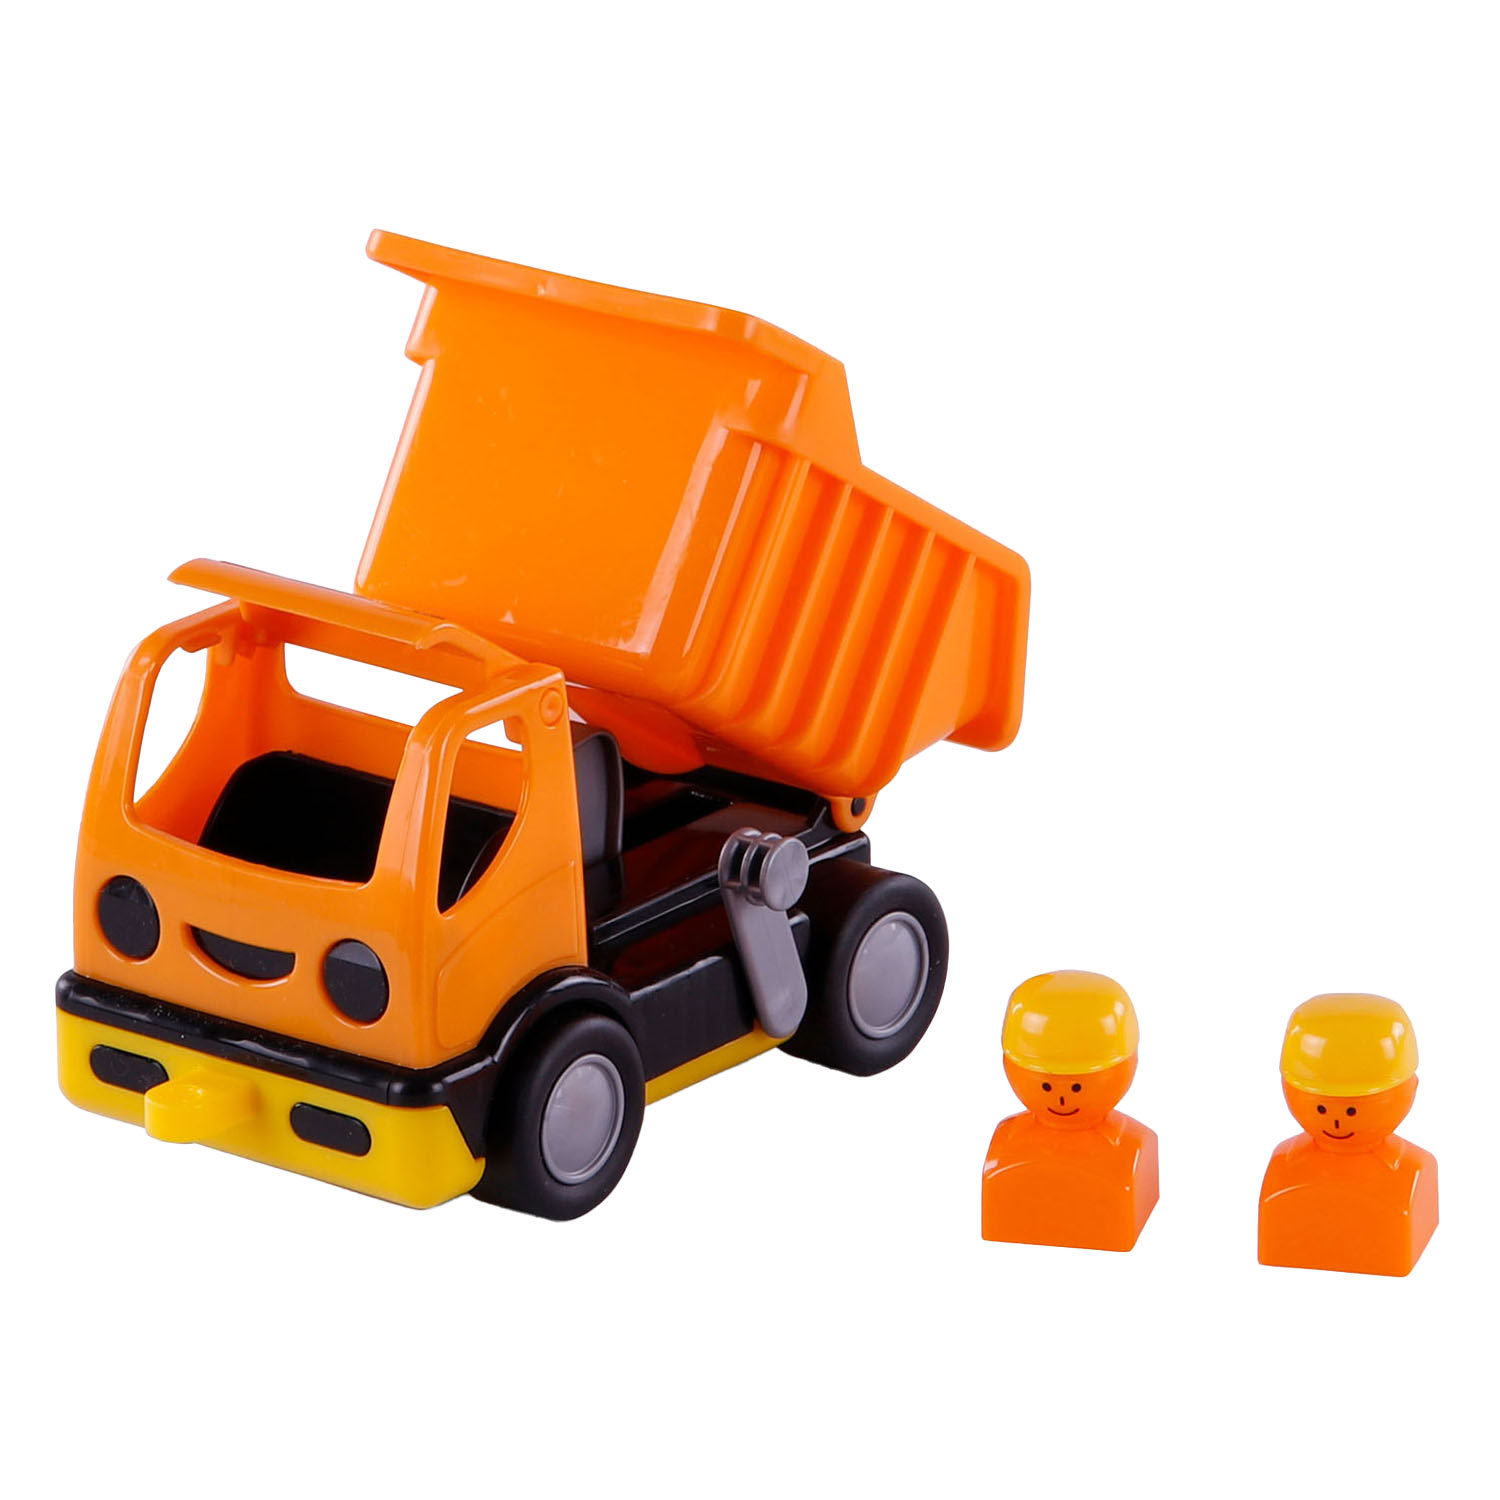 Cavallino Mon premier camion benne Orange, 19 cm